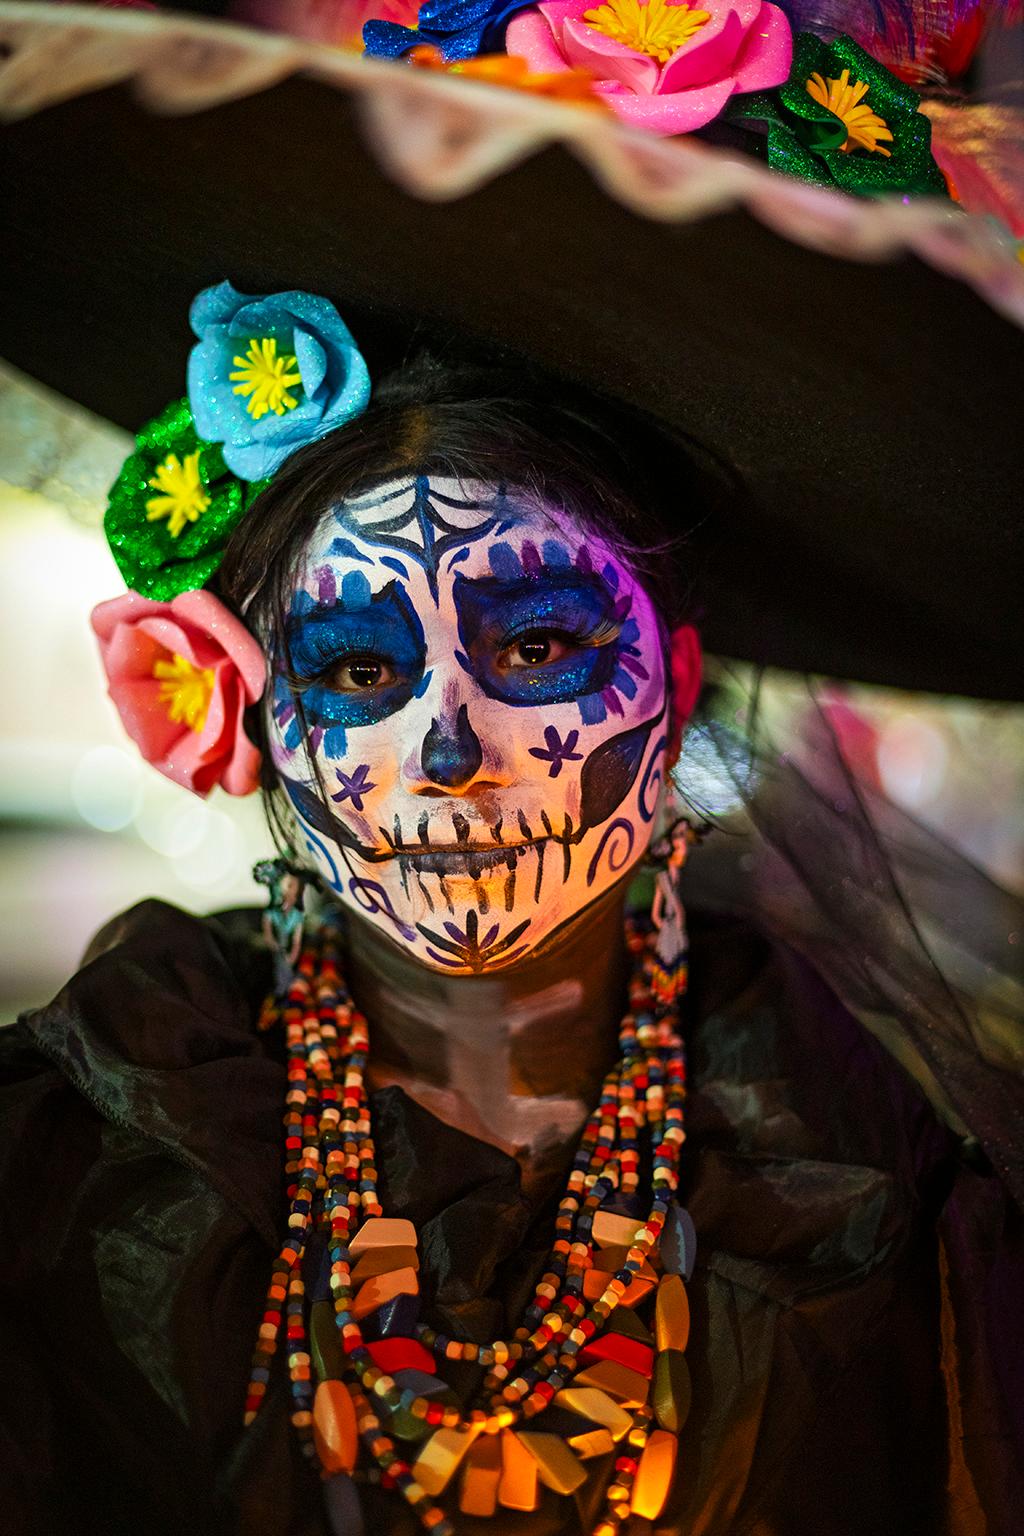  Cosmo Condina Color Photograph - “ I wait for you evermore”, Day of the Dead, Dia de los Muertos, Mexico, 2023